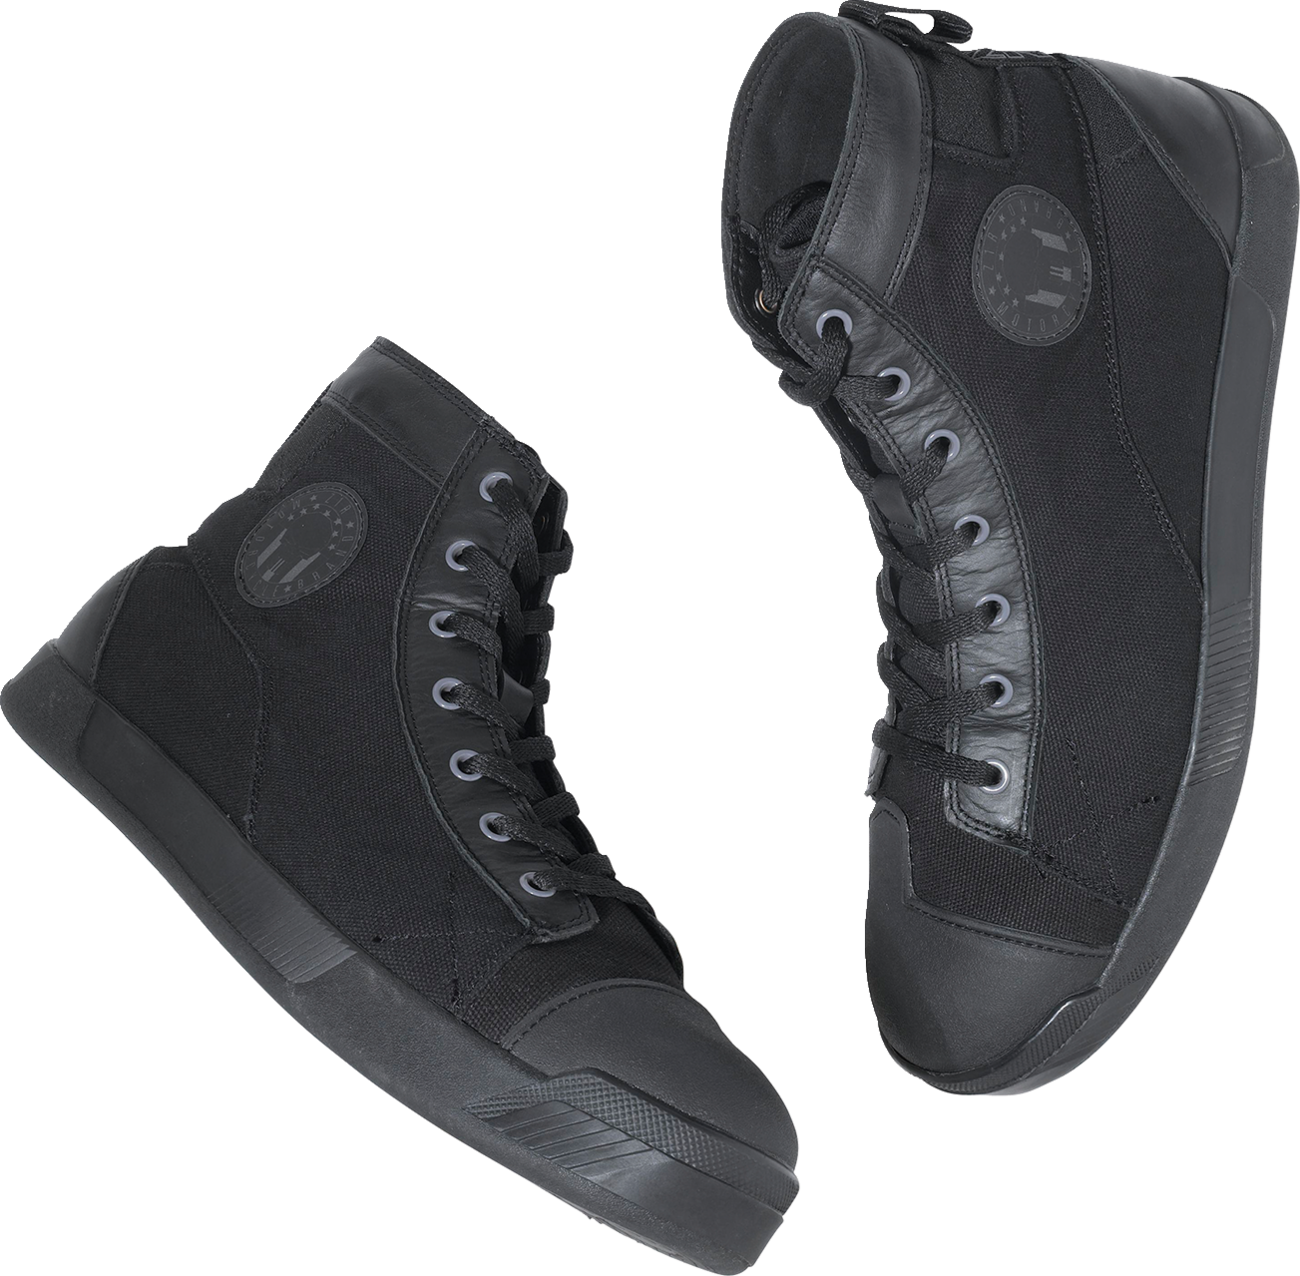 Z1R Haggard Boots - Black - US 13 3401-0962